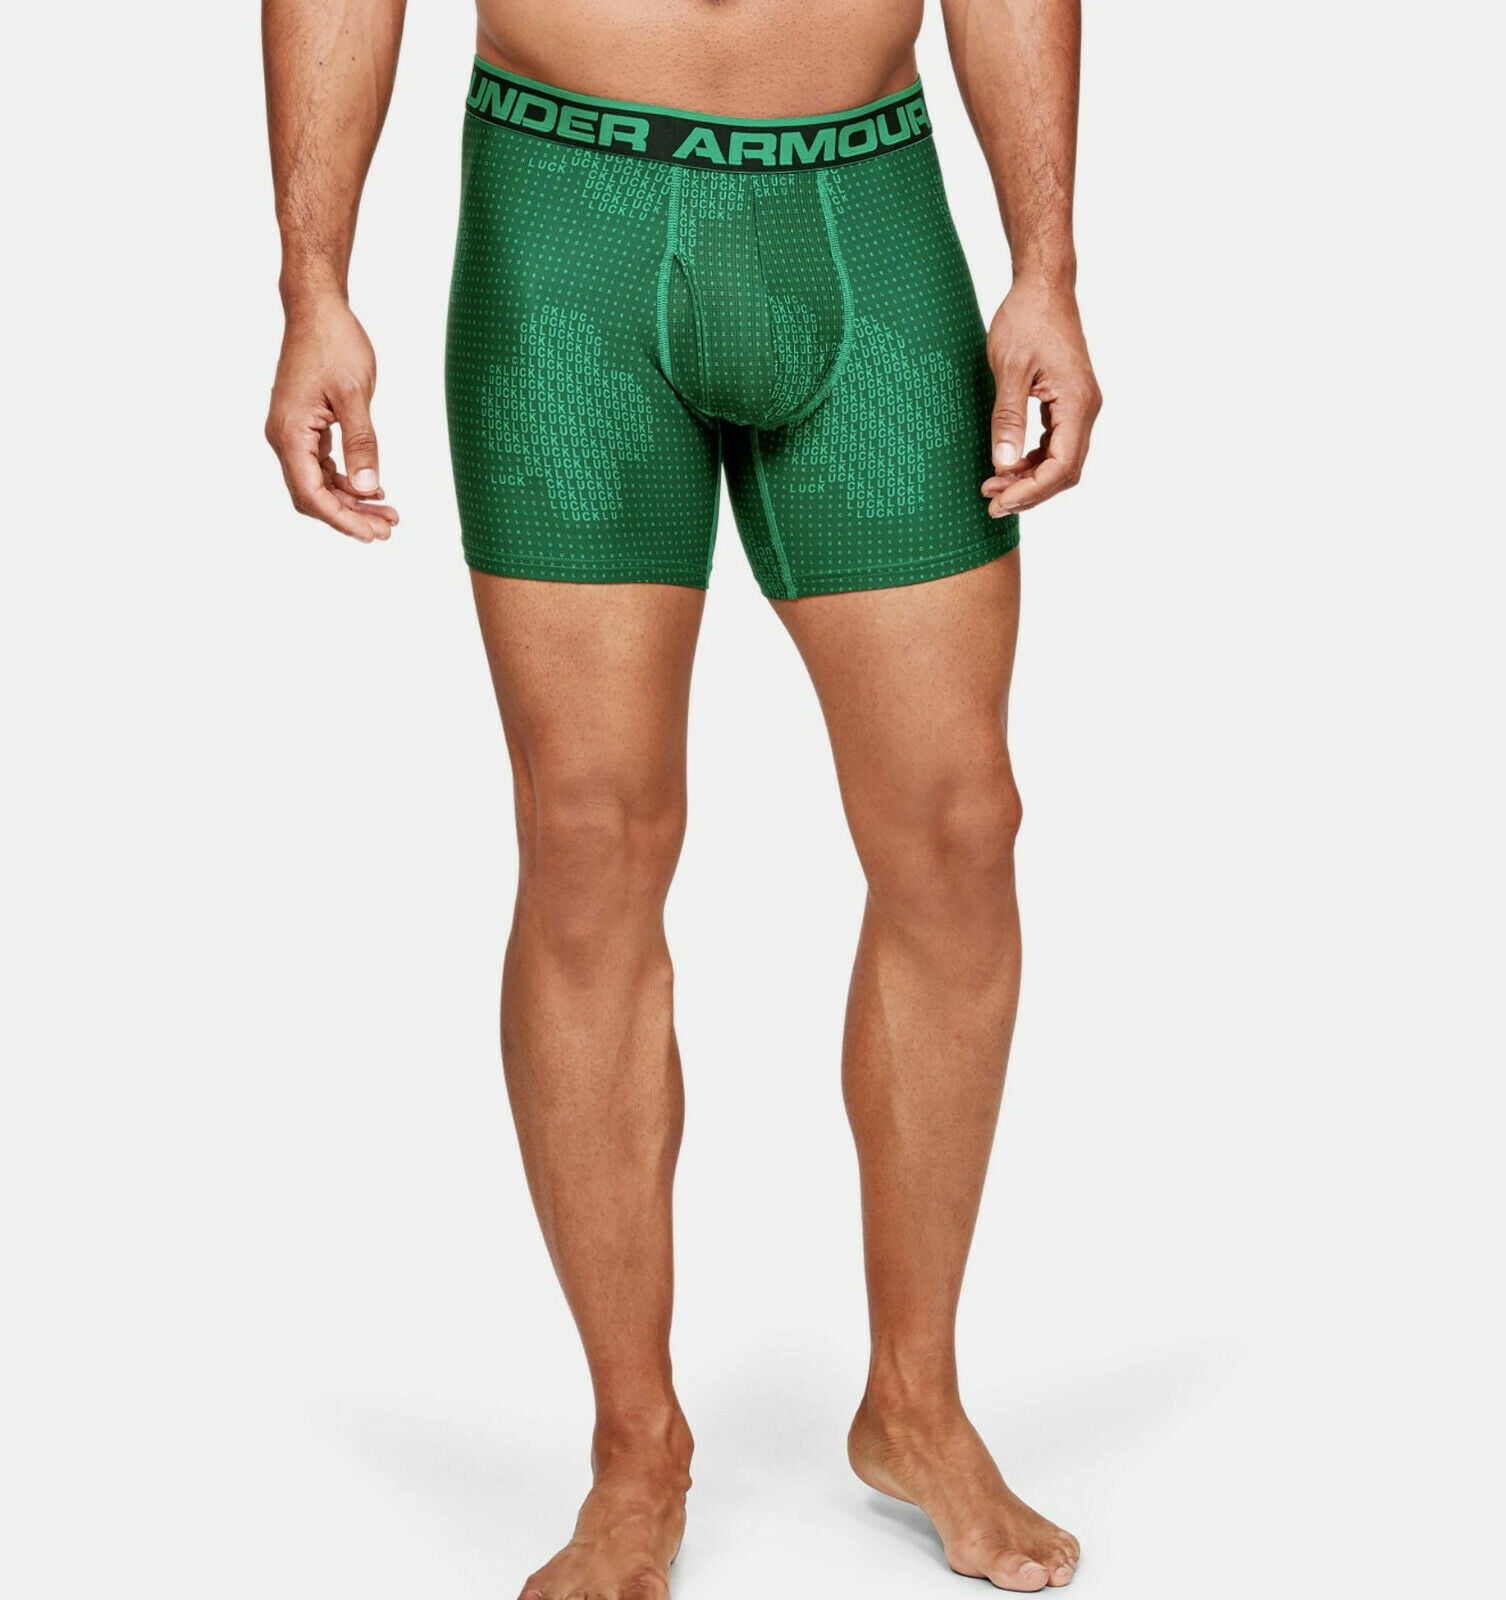 Under Armour Men's Original Series Printed Boxerjock Underwear, Green Xl 